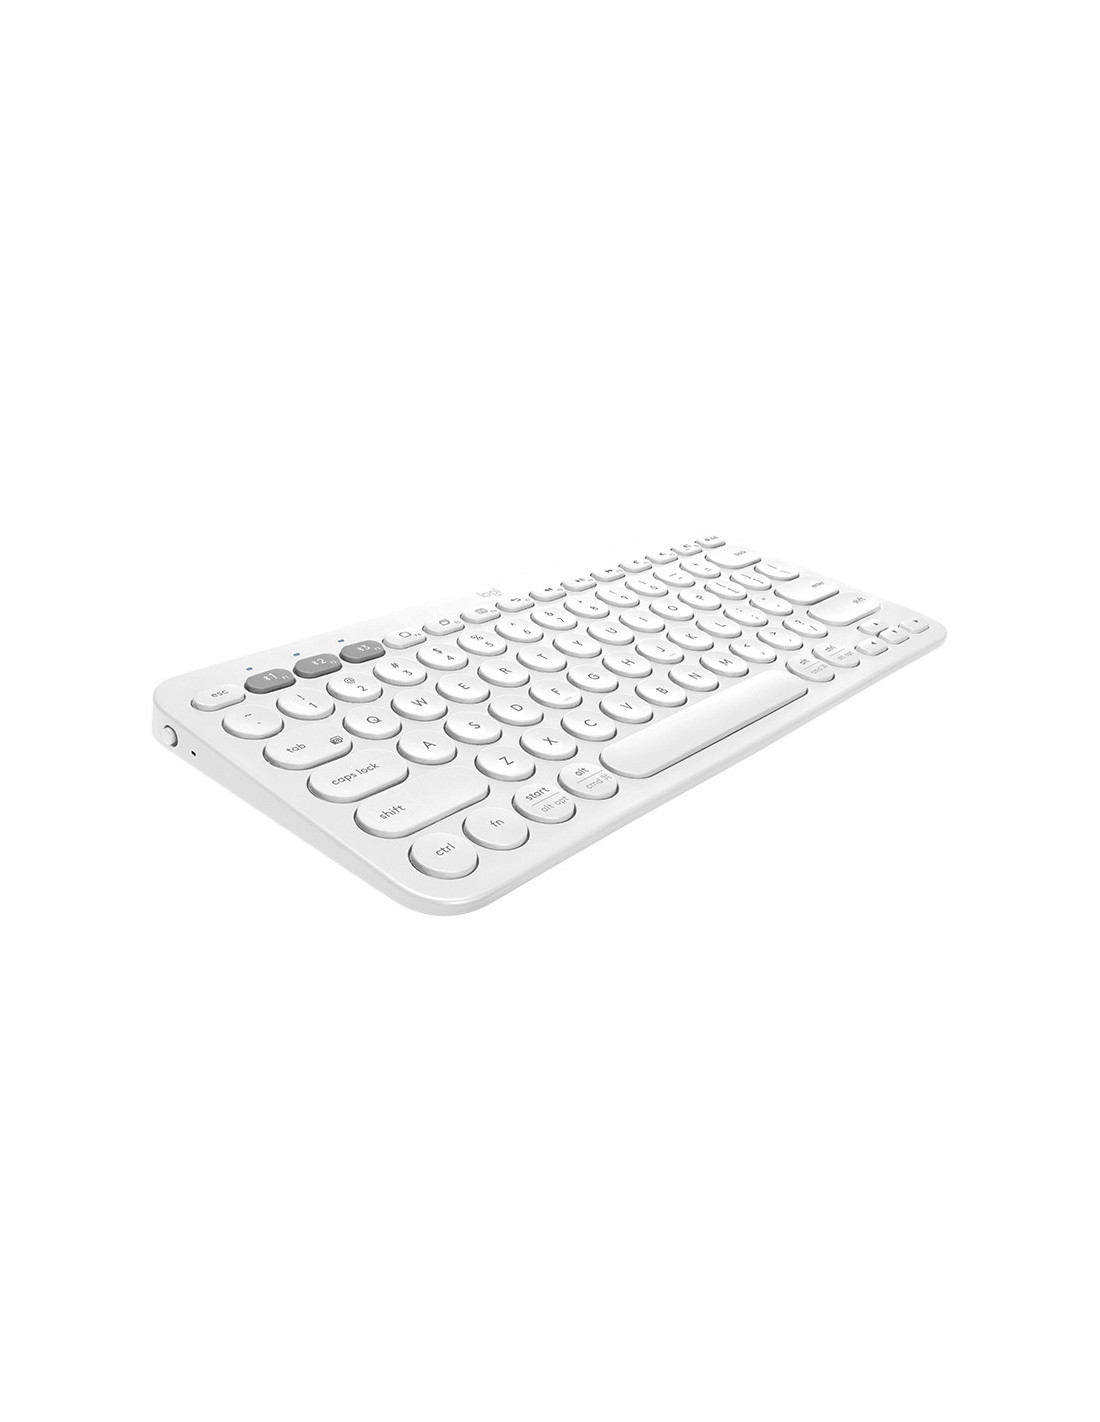 Logitech K380 Wireless Keyboard - White (Spanish)